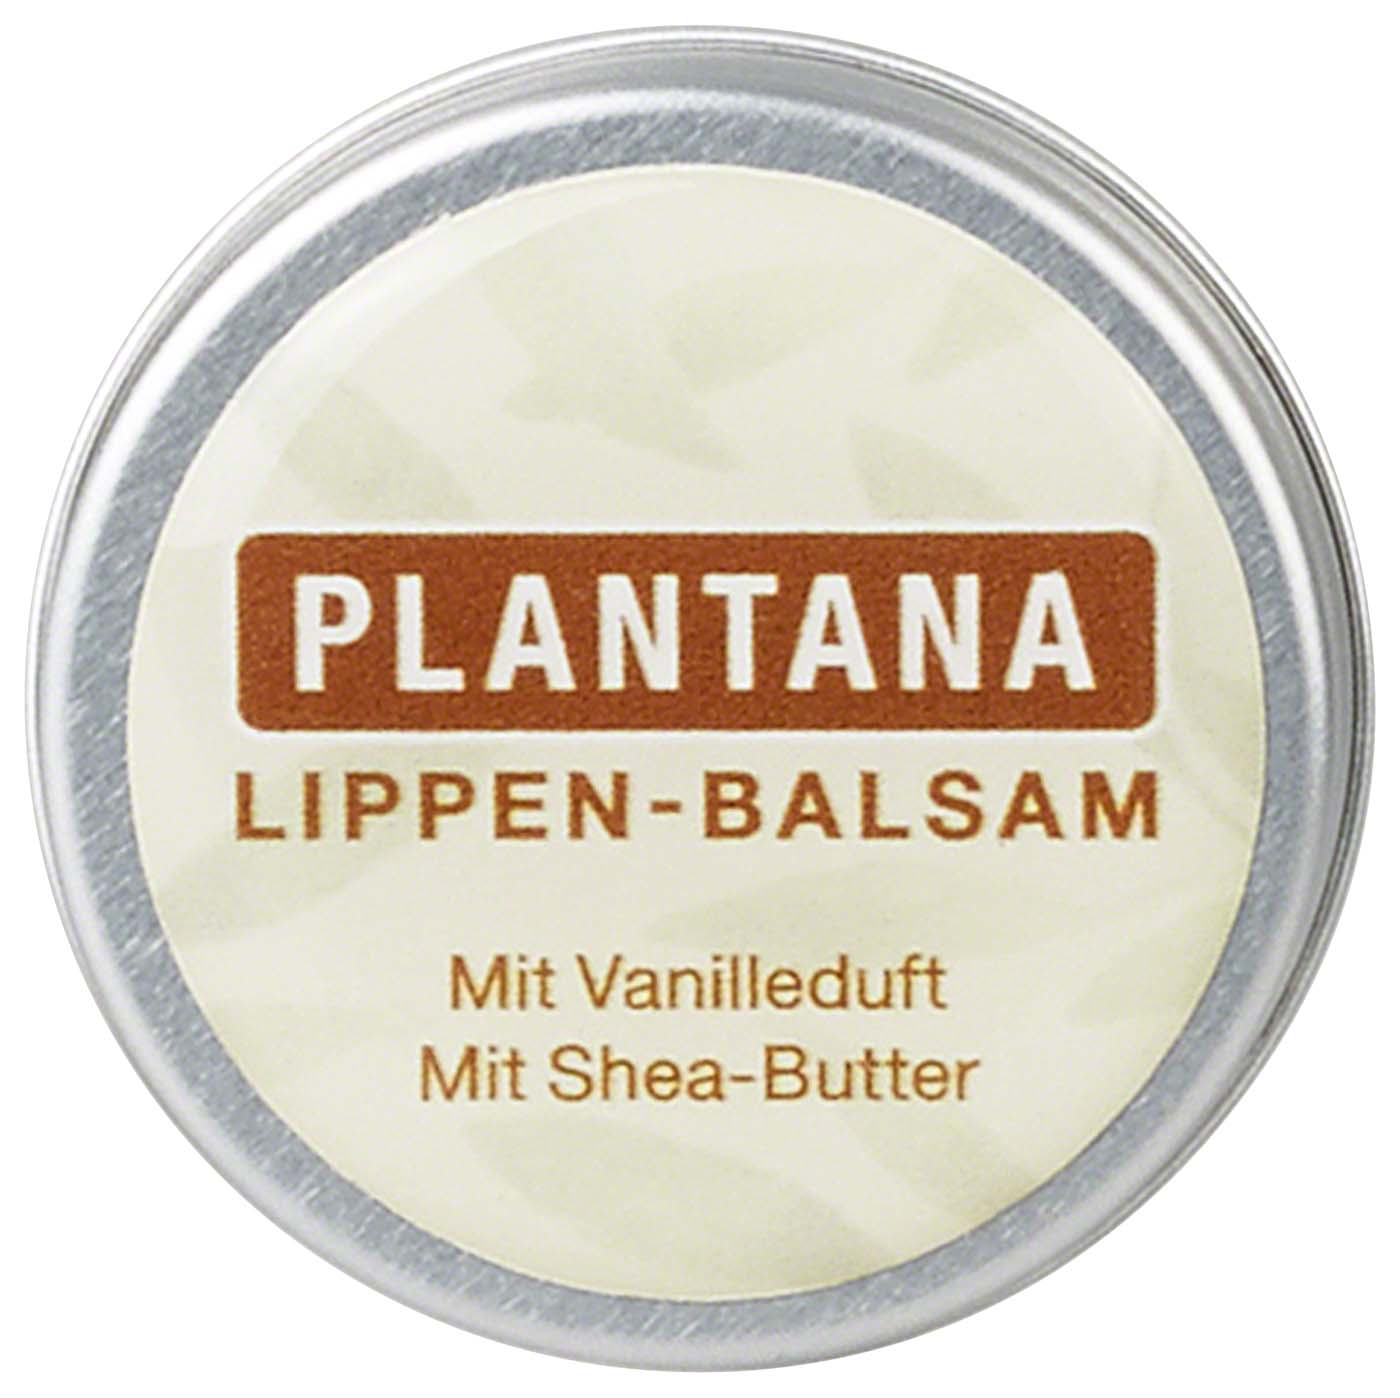 PLANTANA® LIPPEN-BALSAM Hager &amp; Werken